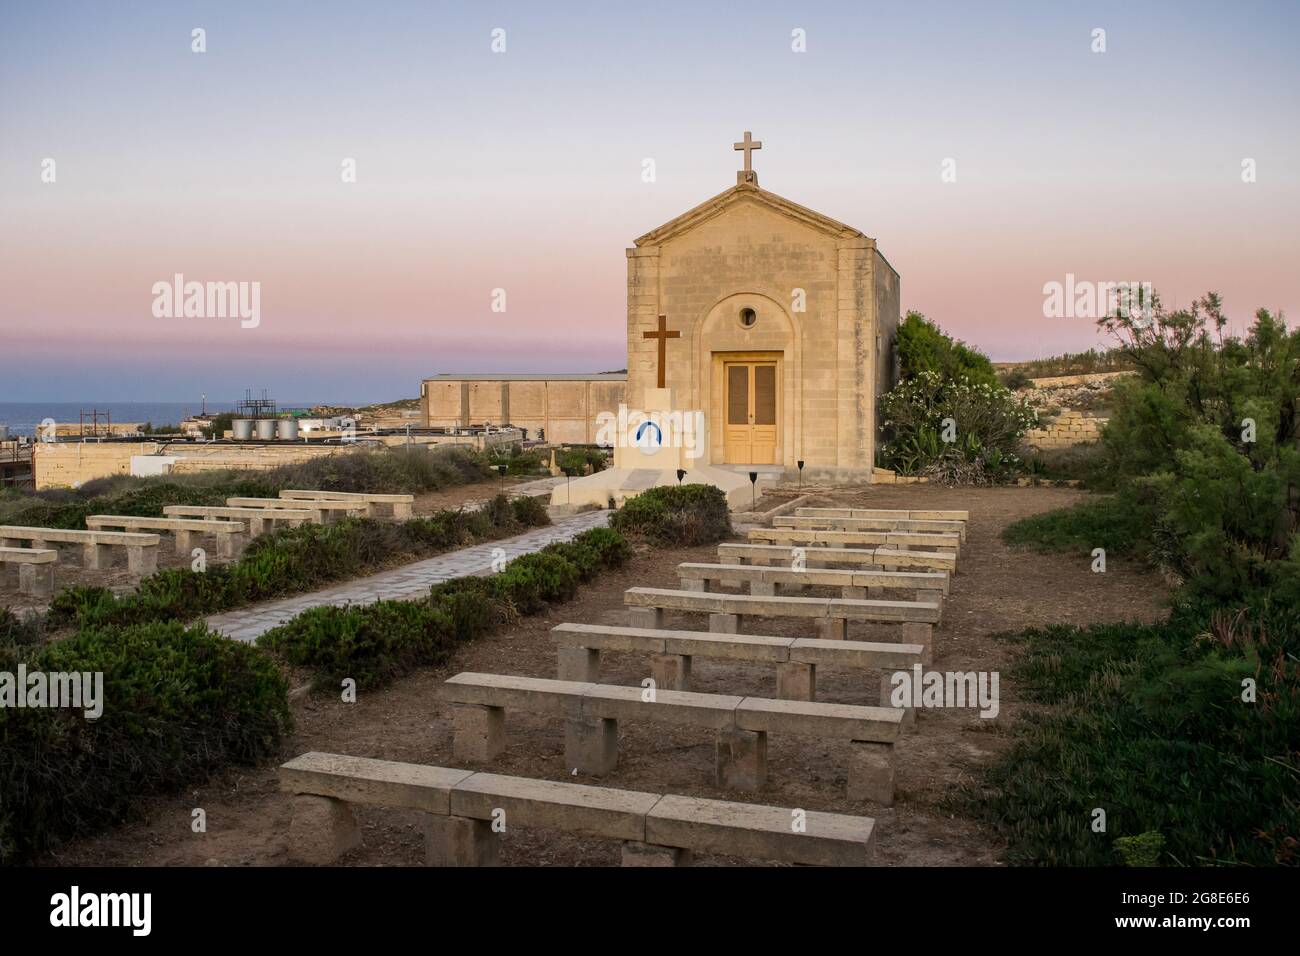 KALKARA, MALTA - May 22, 2020: a Christian chapel and cemetery of cholera disease victims in the area known as Wied Ghammieq, Kalkara, Malta Stock Photo